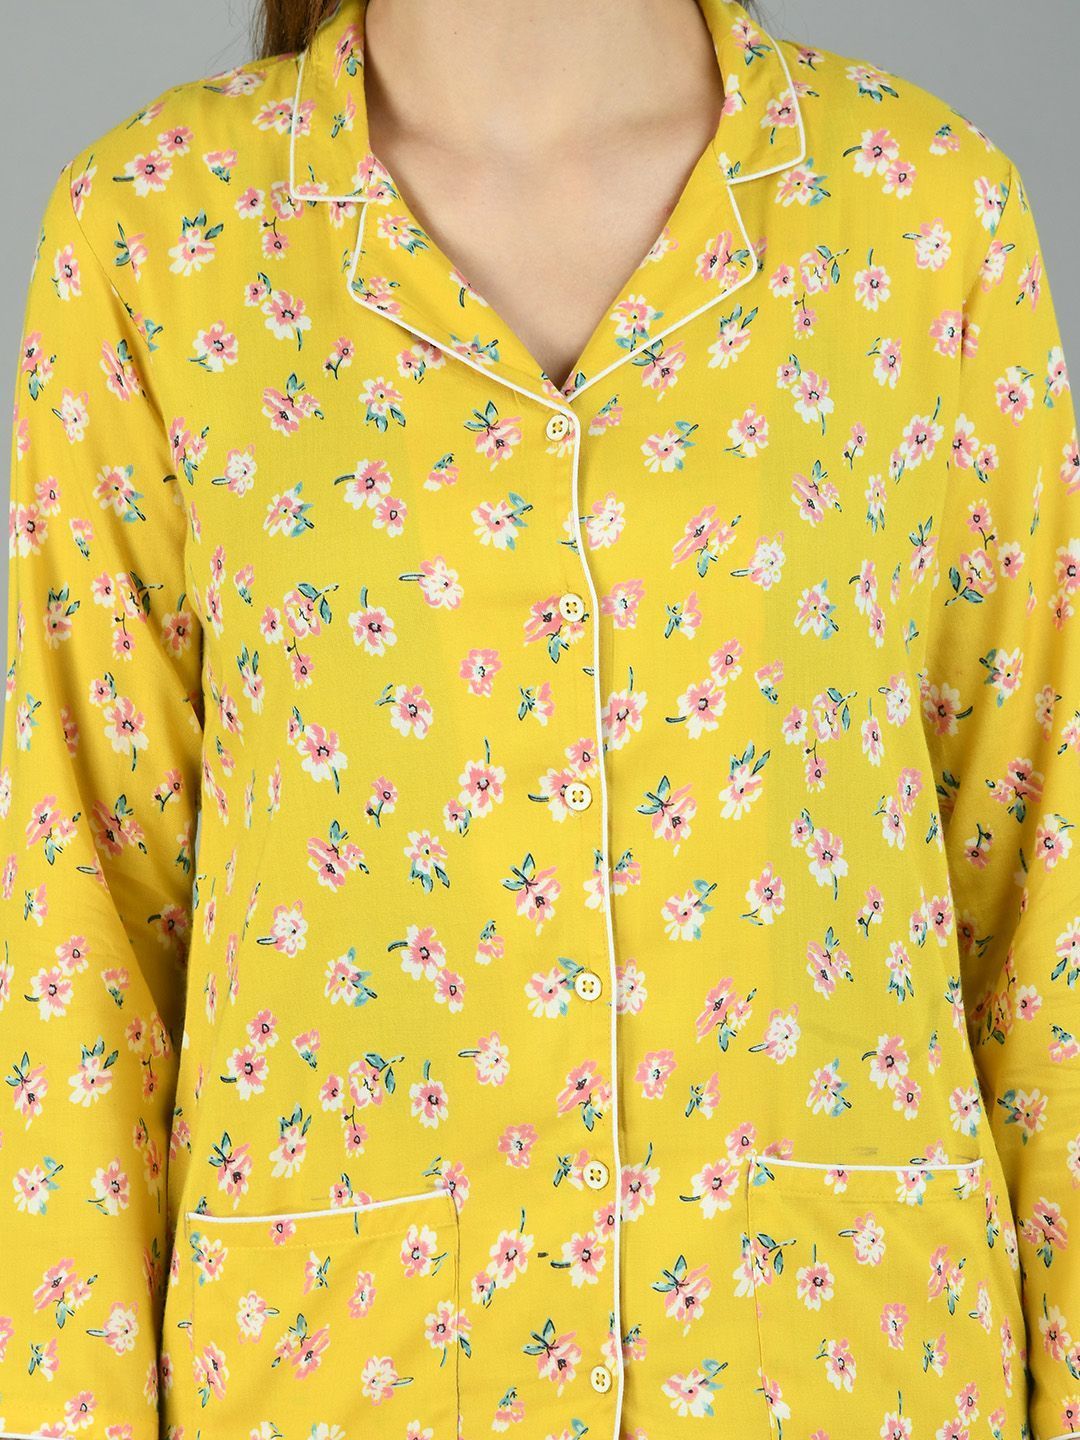 Women's Yellow Cotton Printed Full Sleeve Shirt Collar Casual Shirt Pyjama Set - Myshka